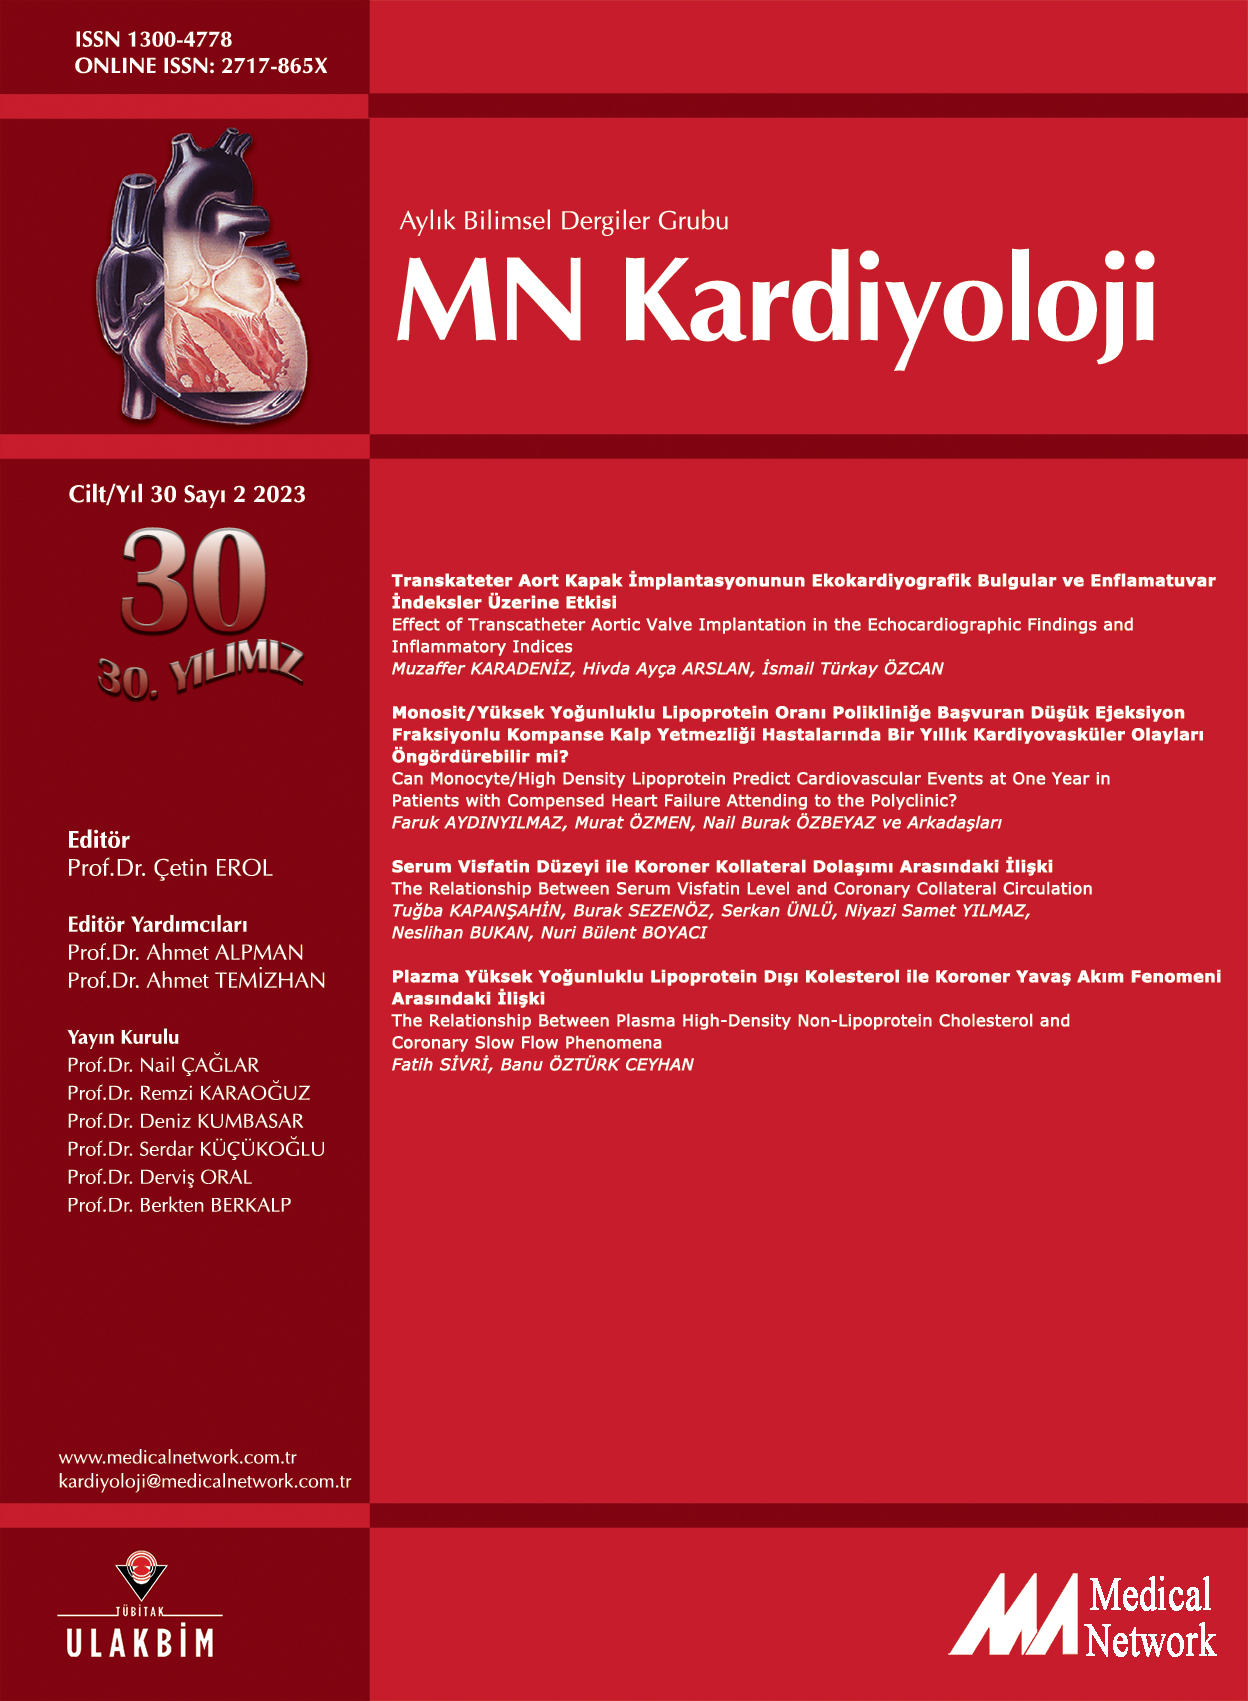 <p>MN Kardiyoloji Cilt: 30 Say: 2 2023 MN Cardiology Volume: 30 No: 2 2023</p>